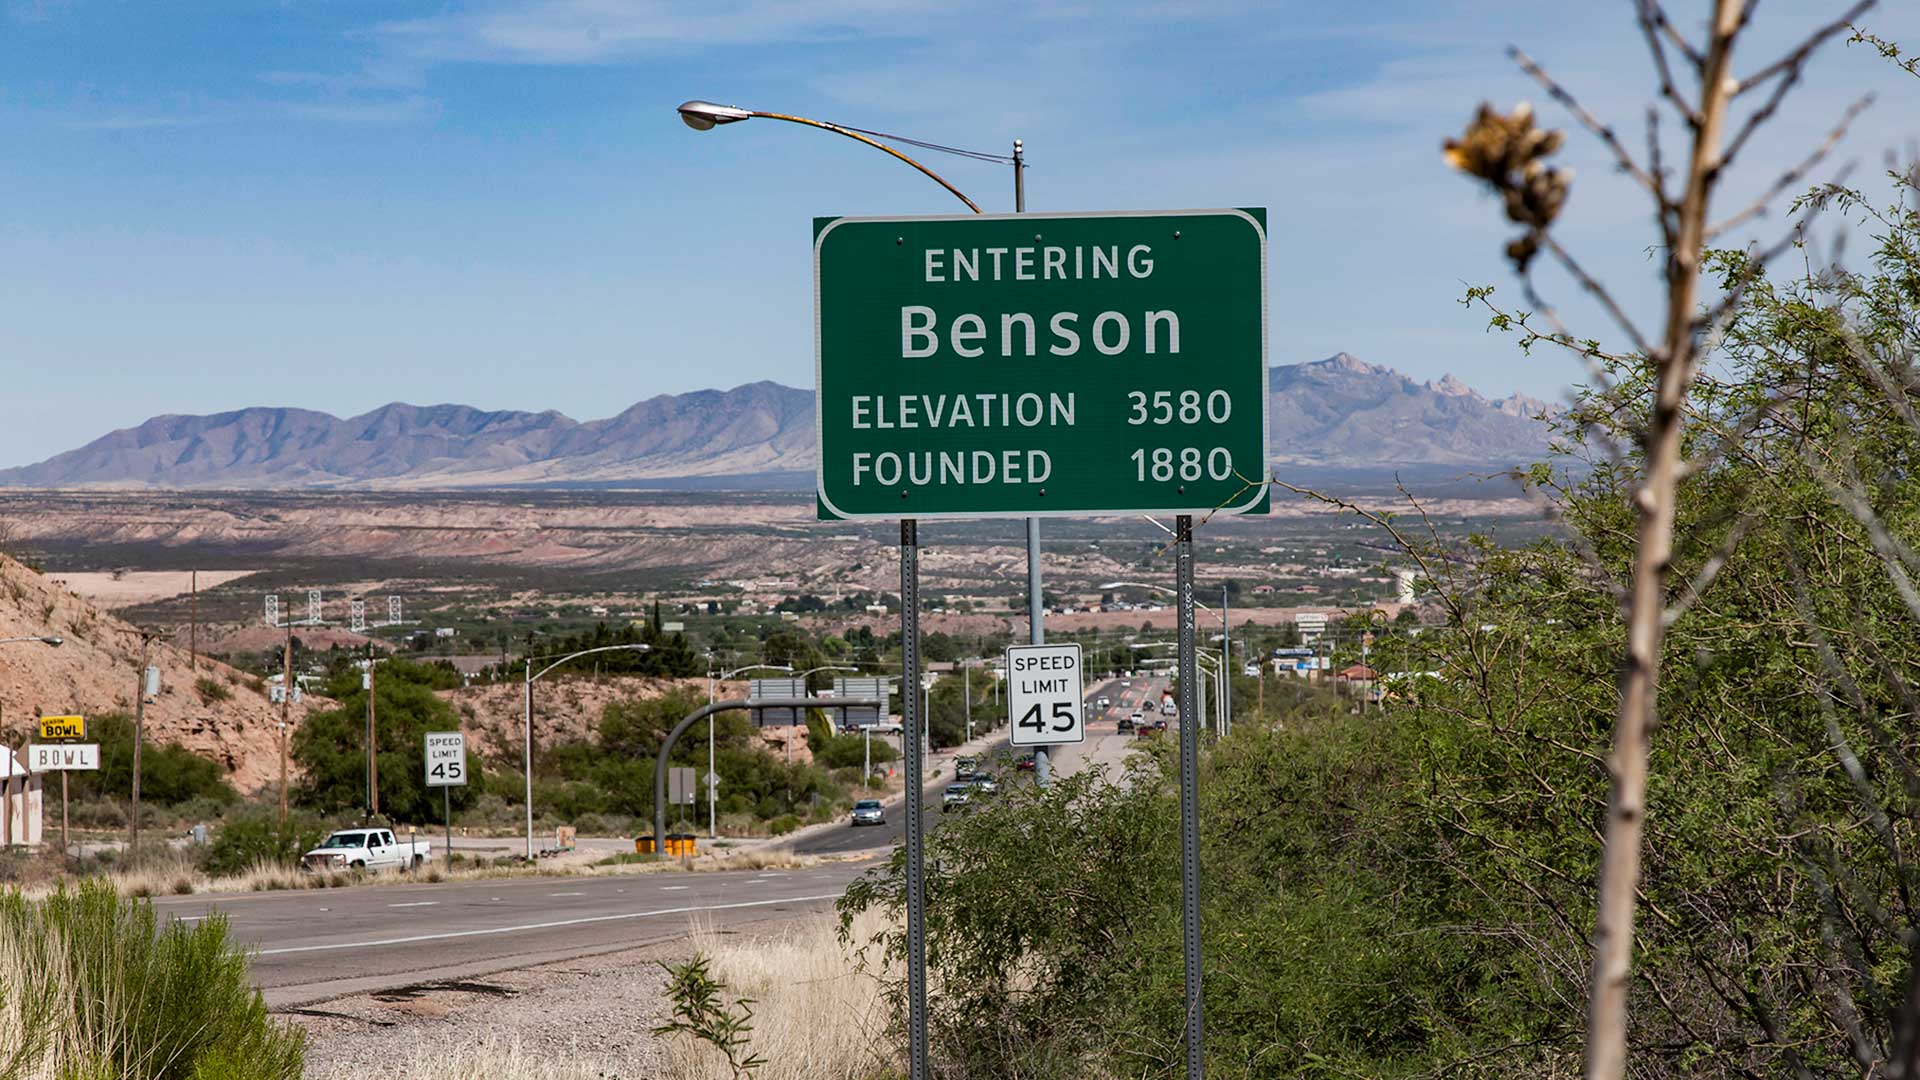 A city sign for Benson, Arizona.